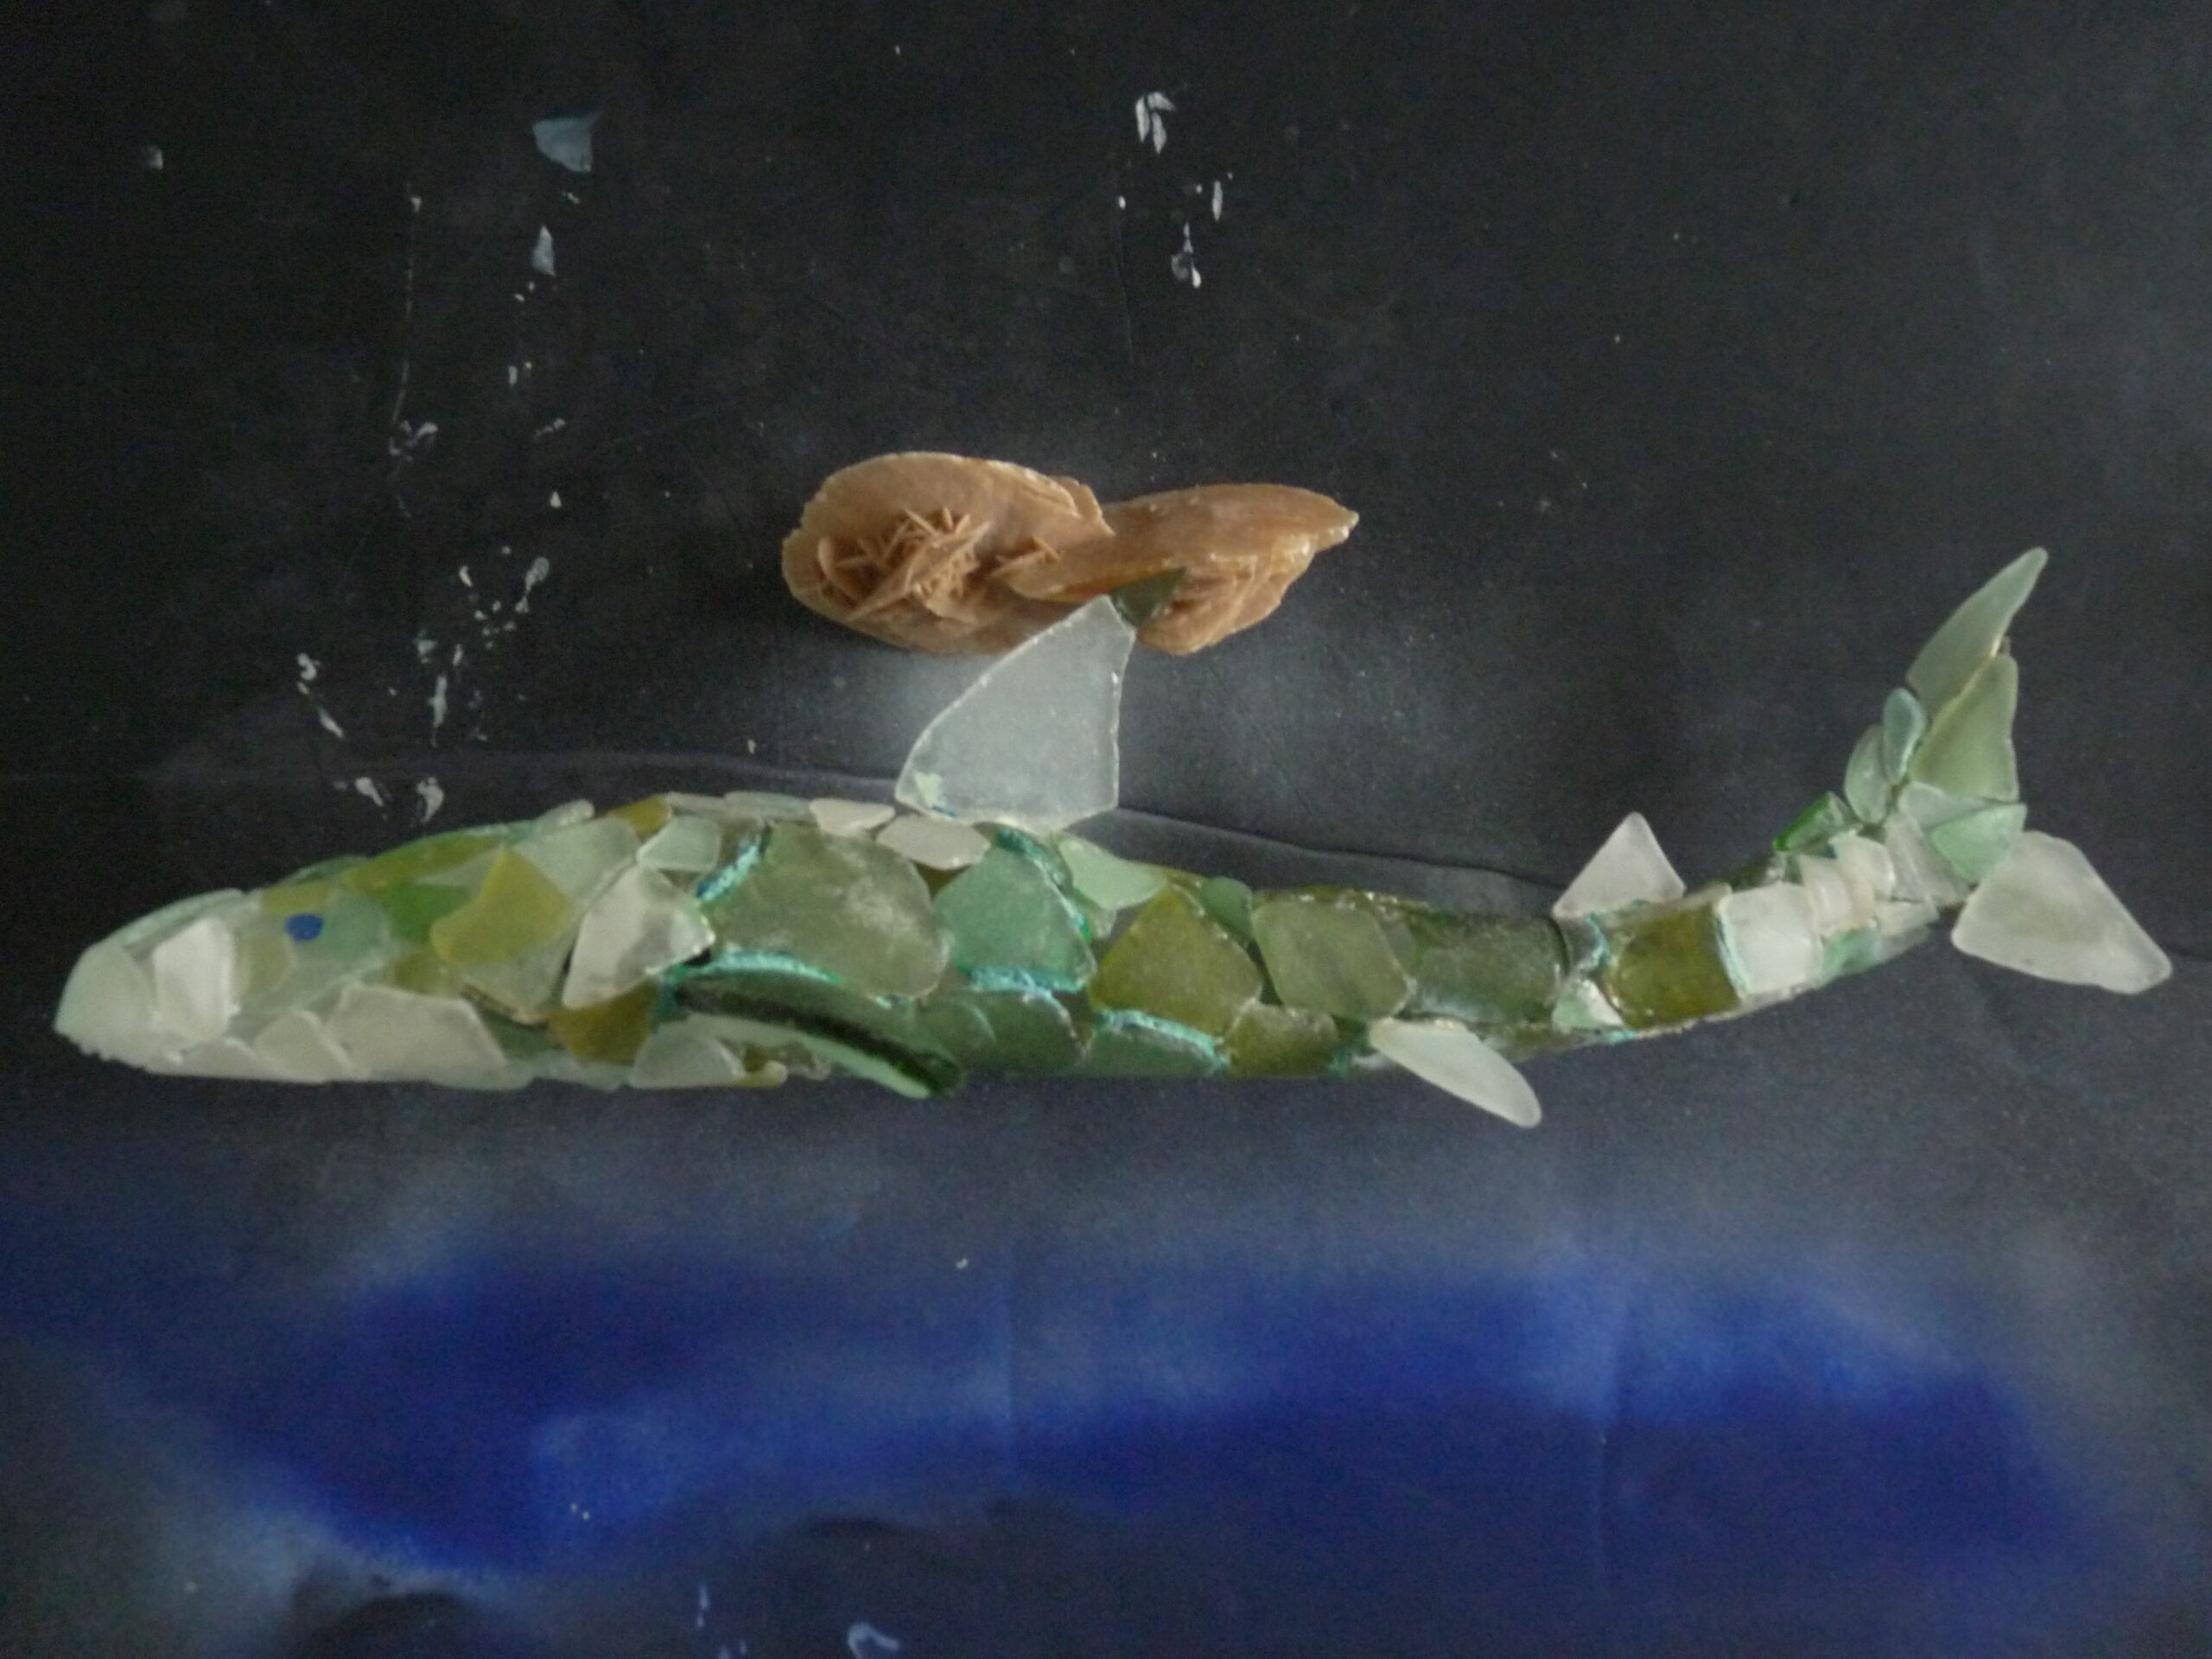 Requin n°2 lumineux 1 sculpture aquatique artiste Alexandre Laigner